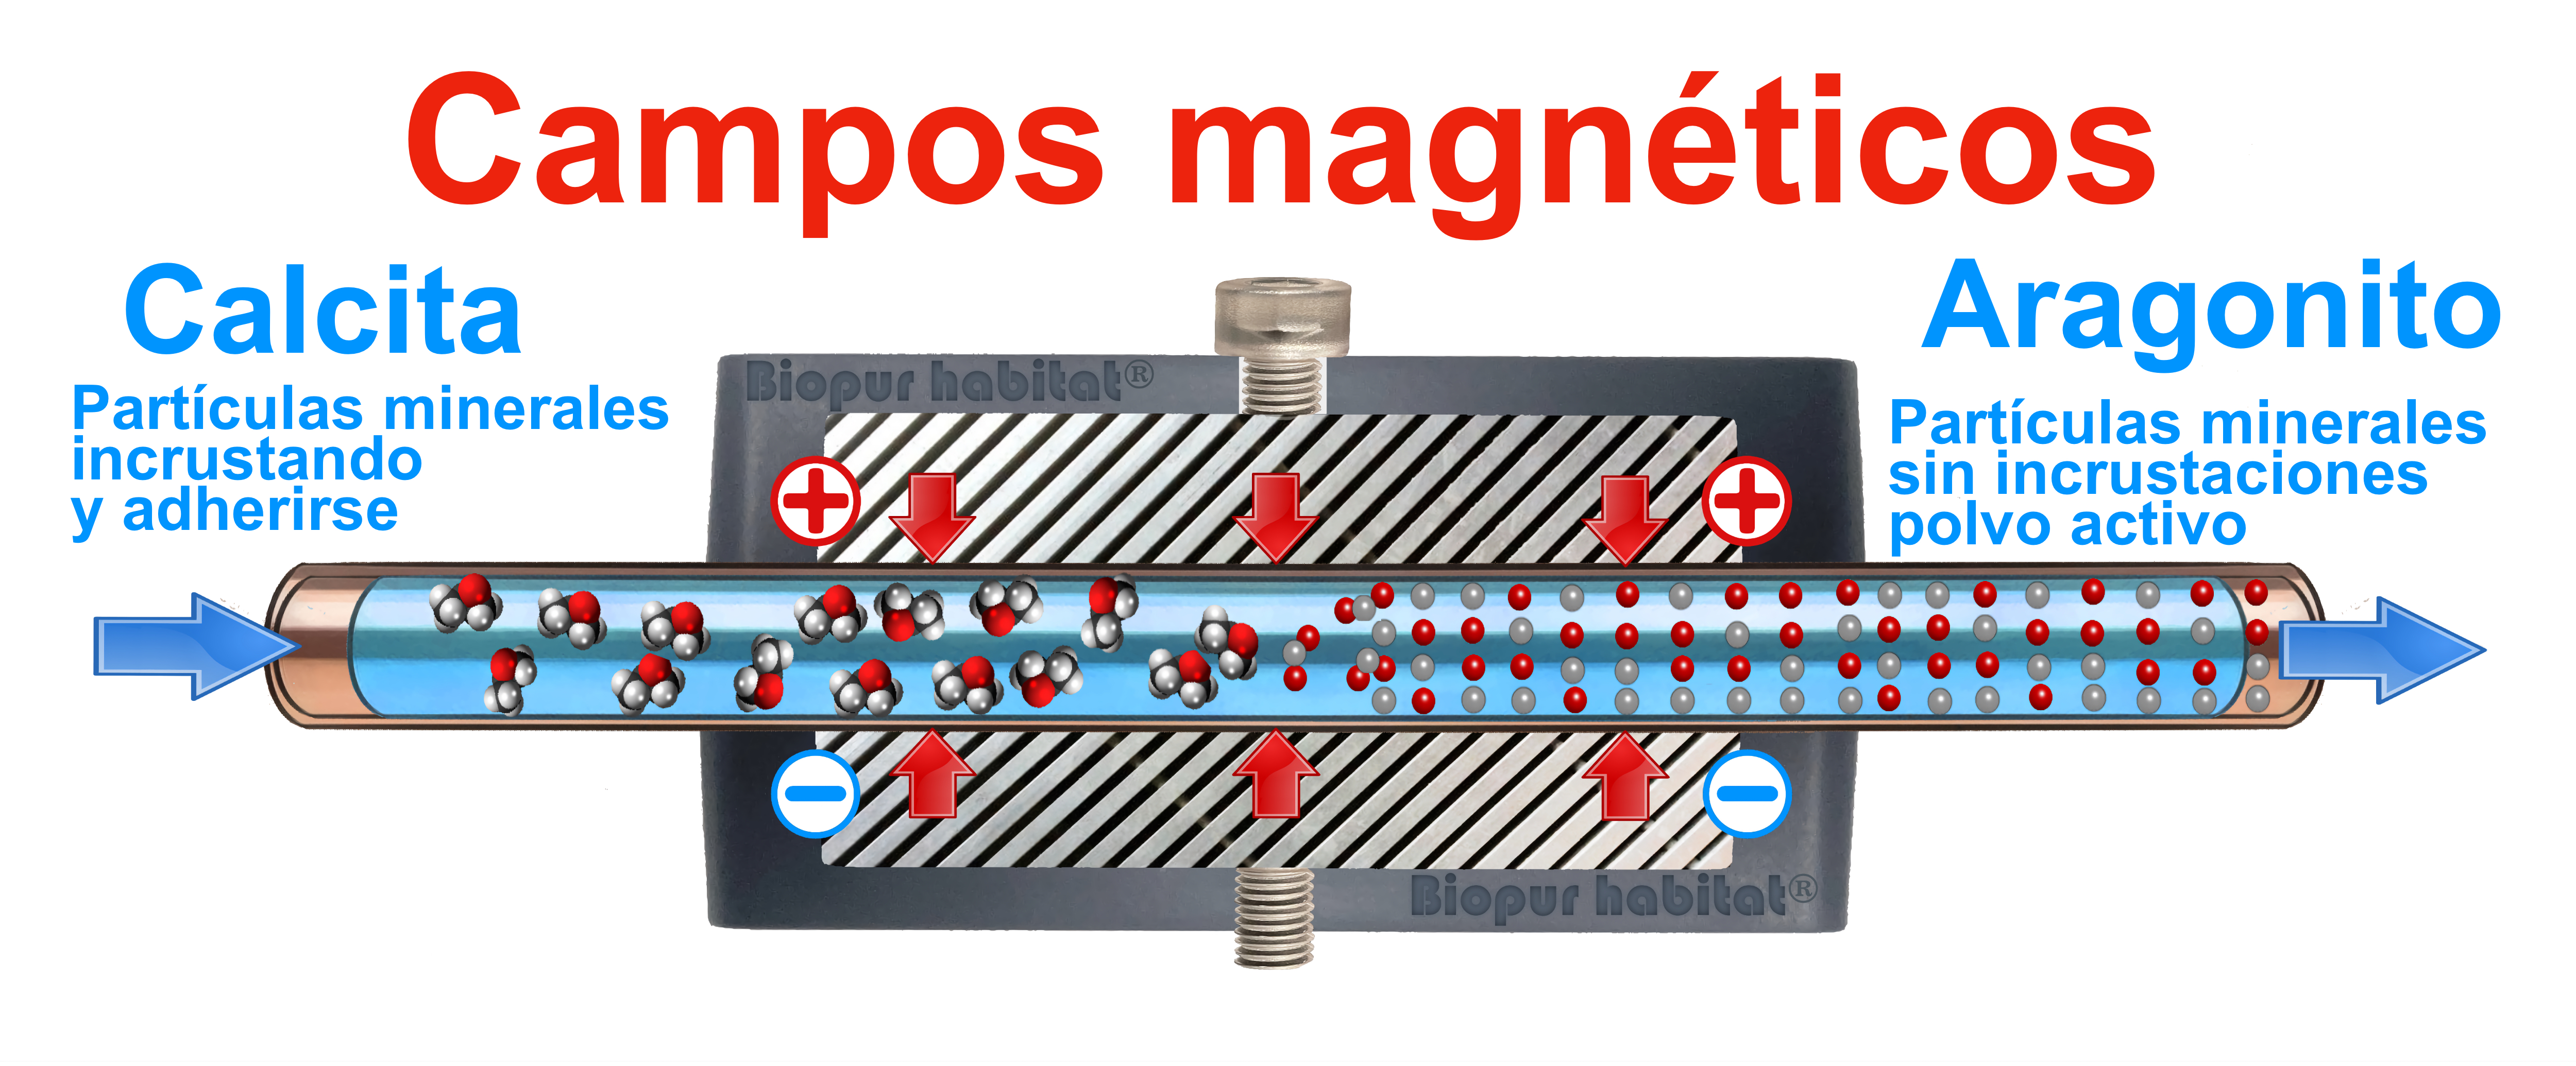 Descalcificador magnetico antical powermag Mi Power 10800 gauss